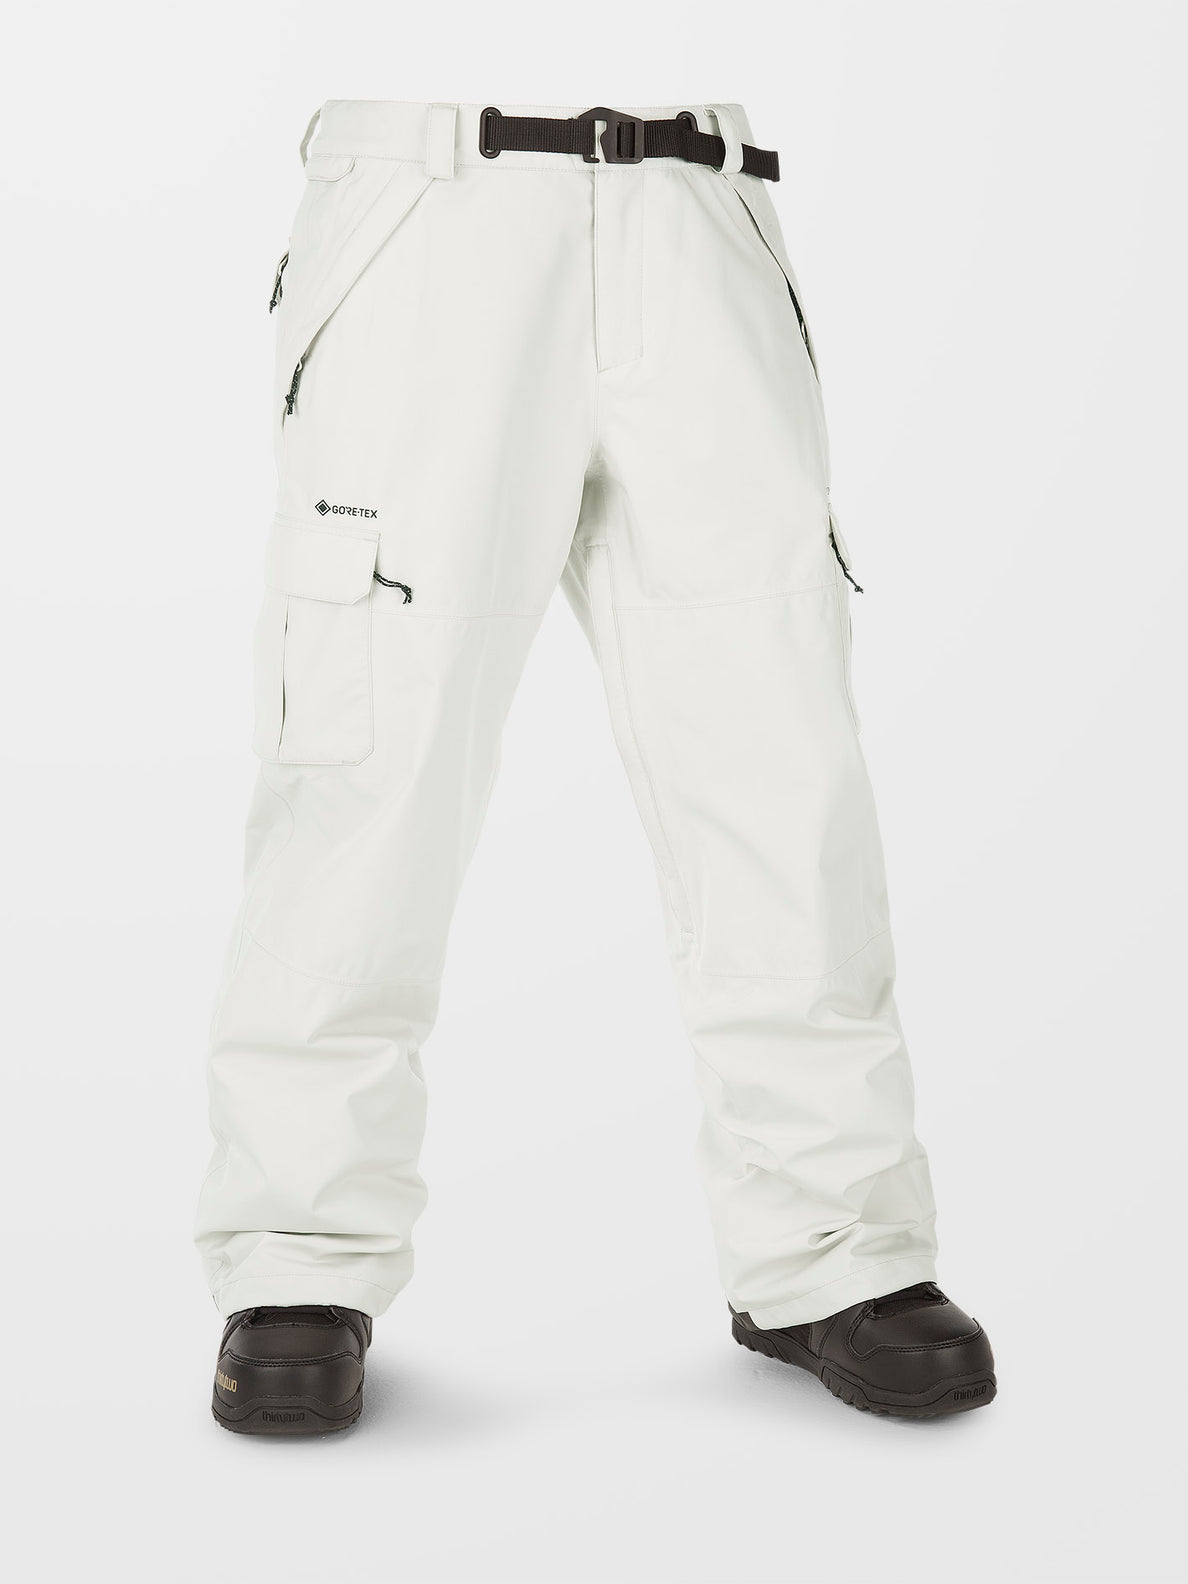 Pantaloni Melancon Gore-Tex - Bianco sporco (Unisex)